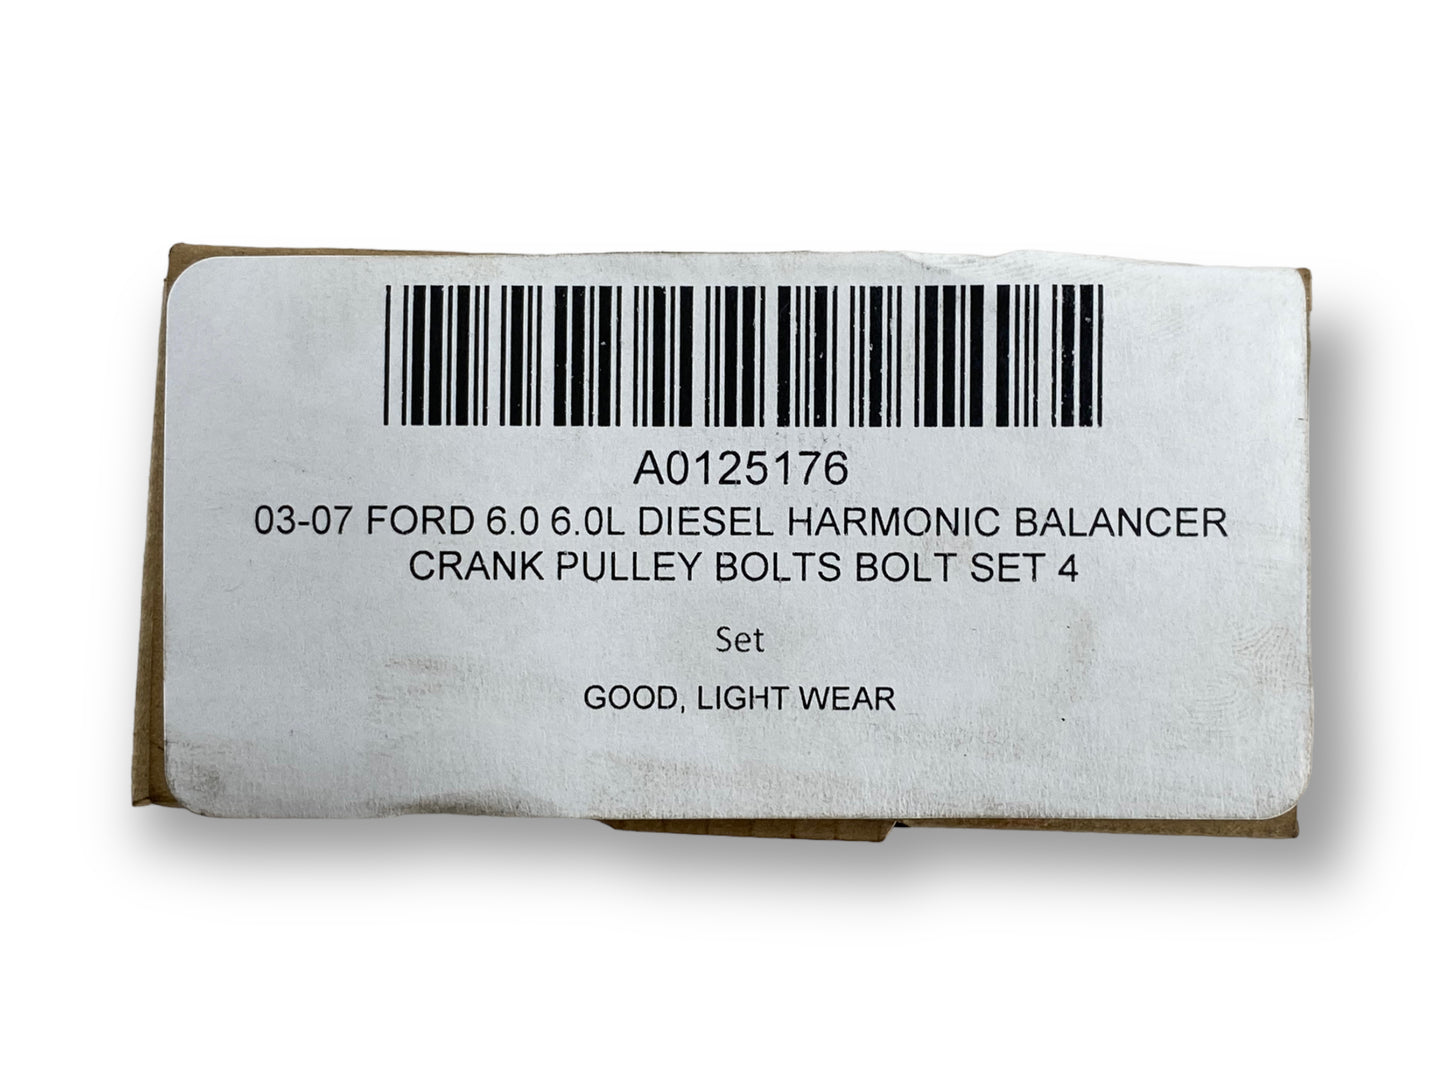 03-07 Ford 6.0 6.0L Diesel Harmonic Balancer Crank Pulley Bolts Bolt Set 4